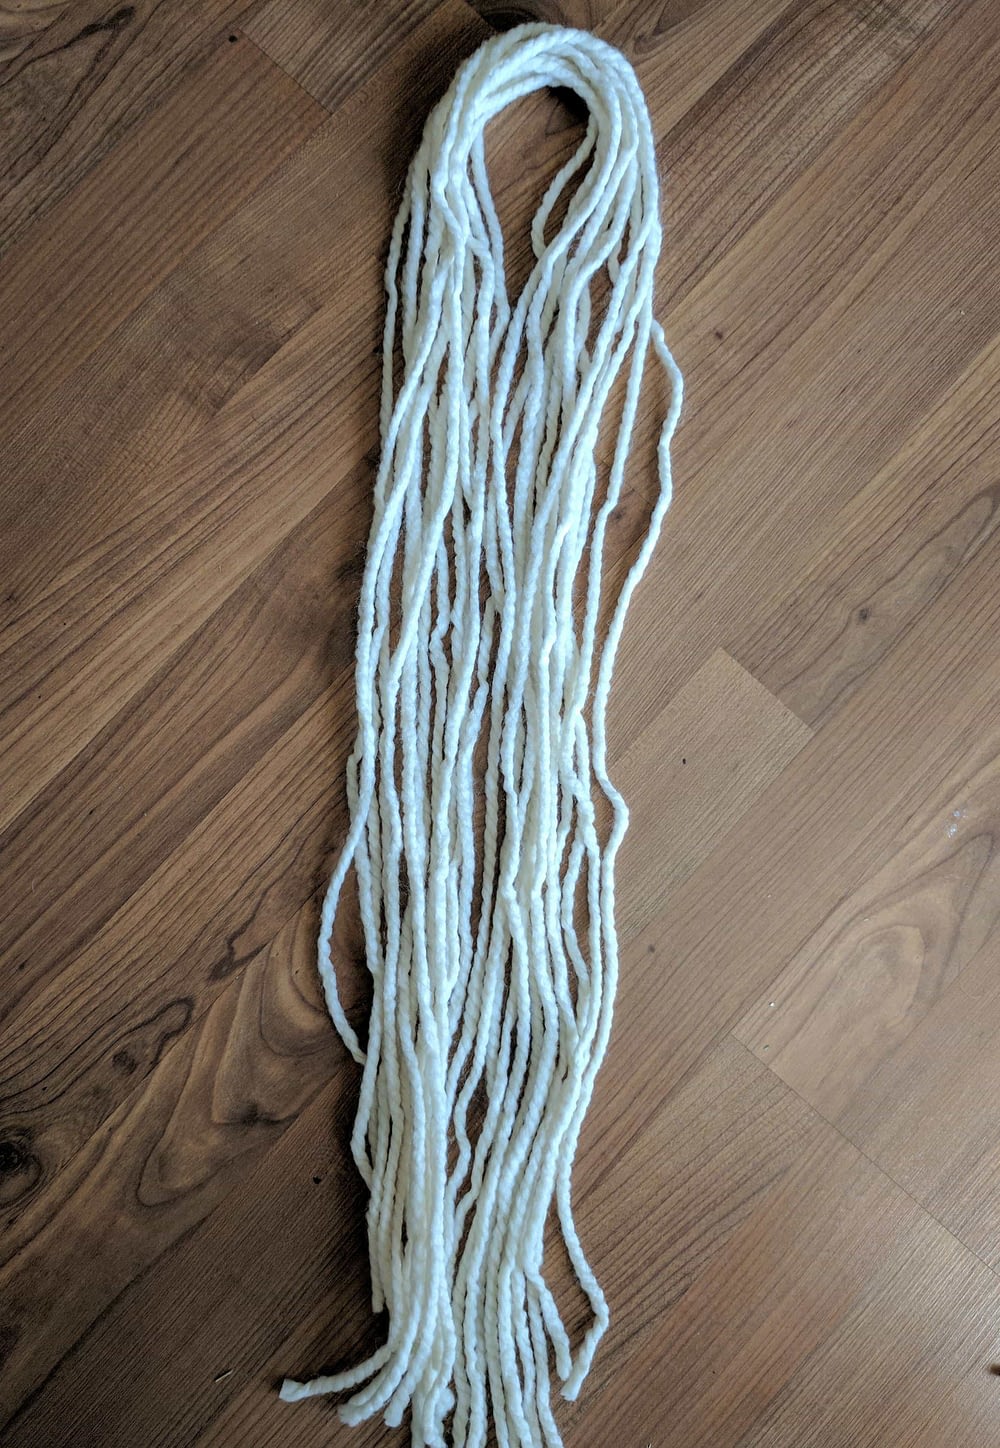 yarn for a DIY wall hanging